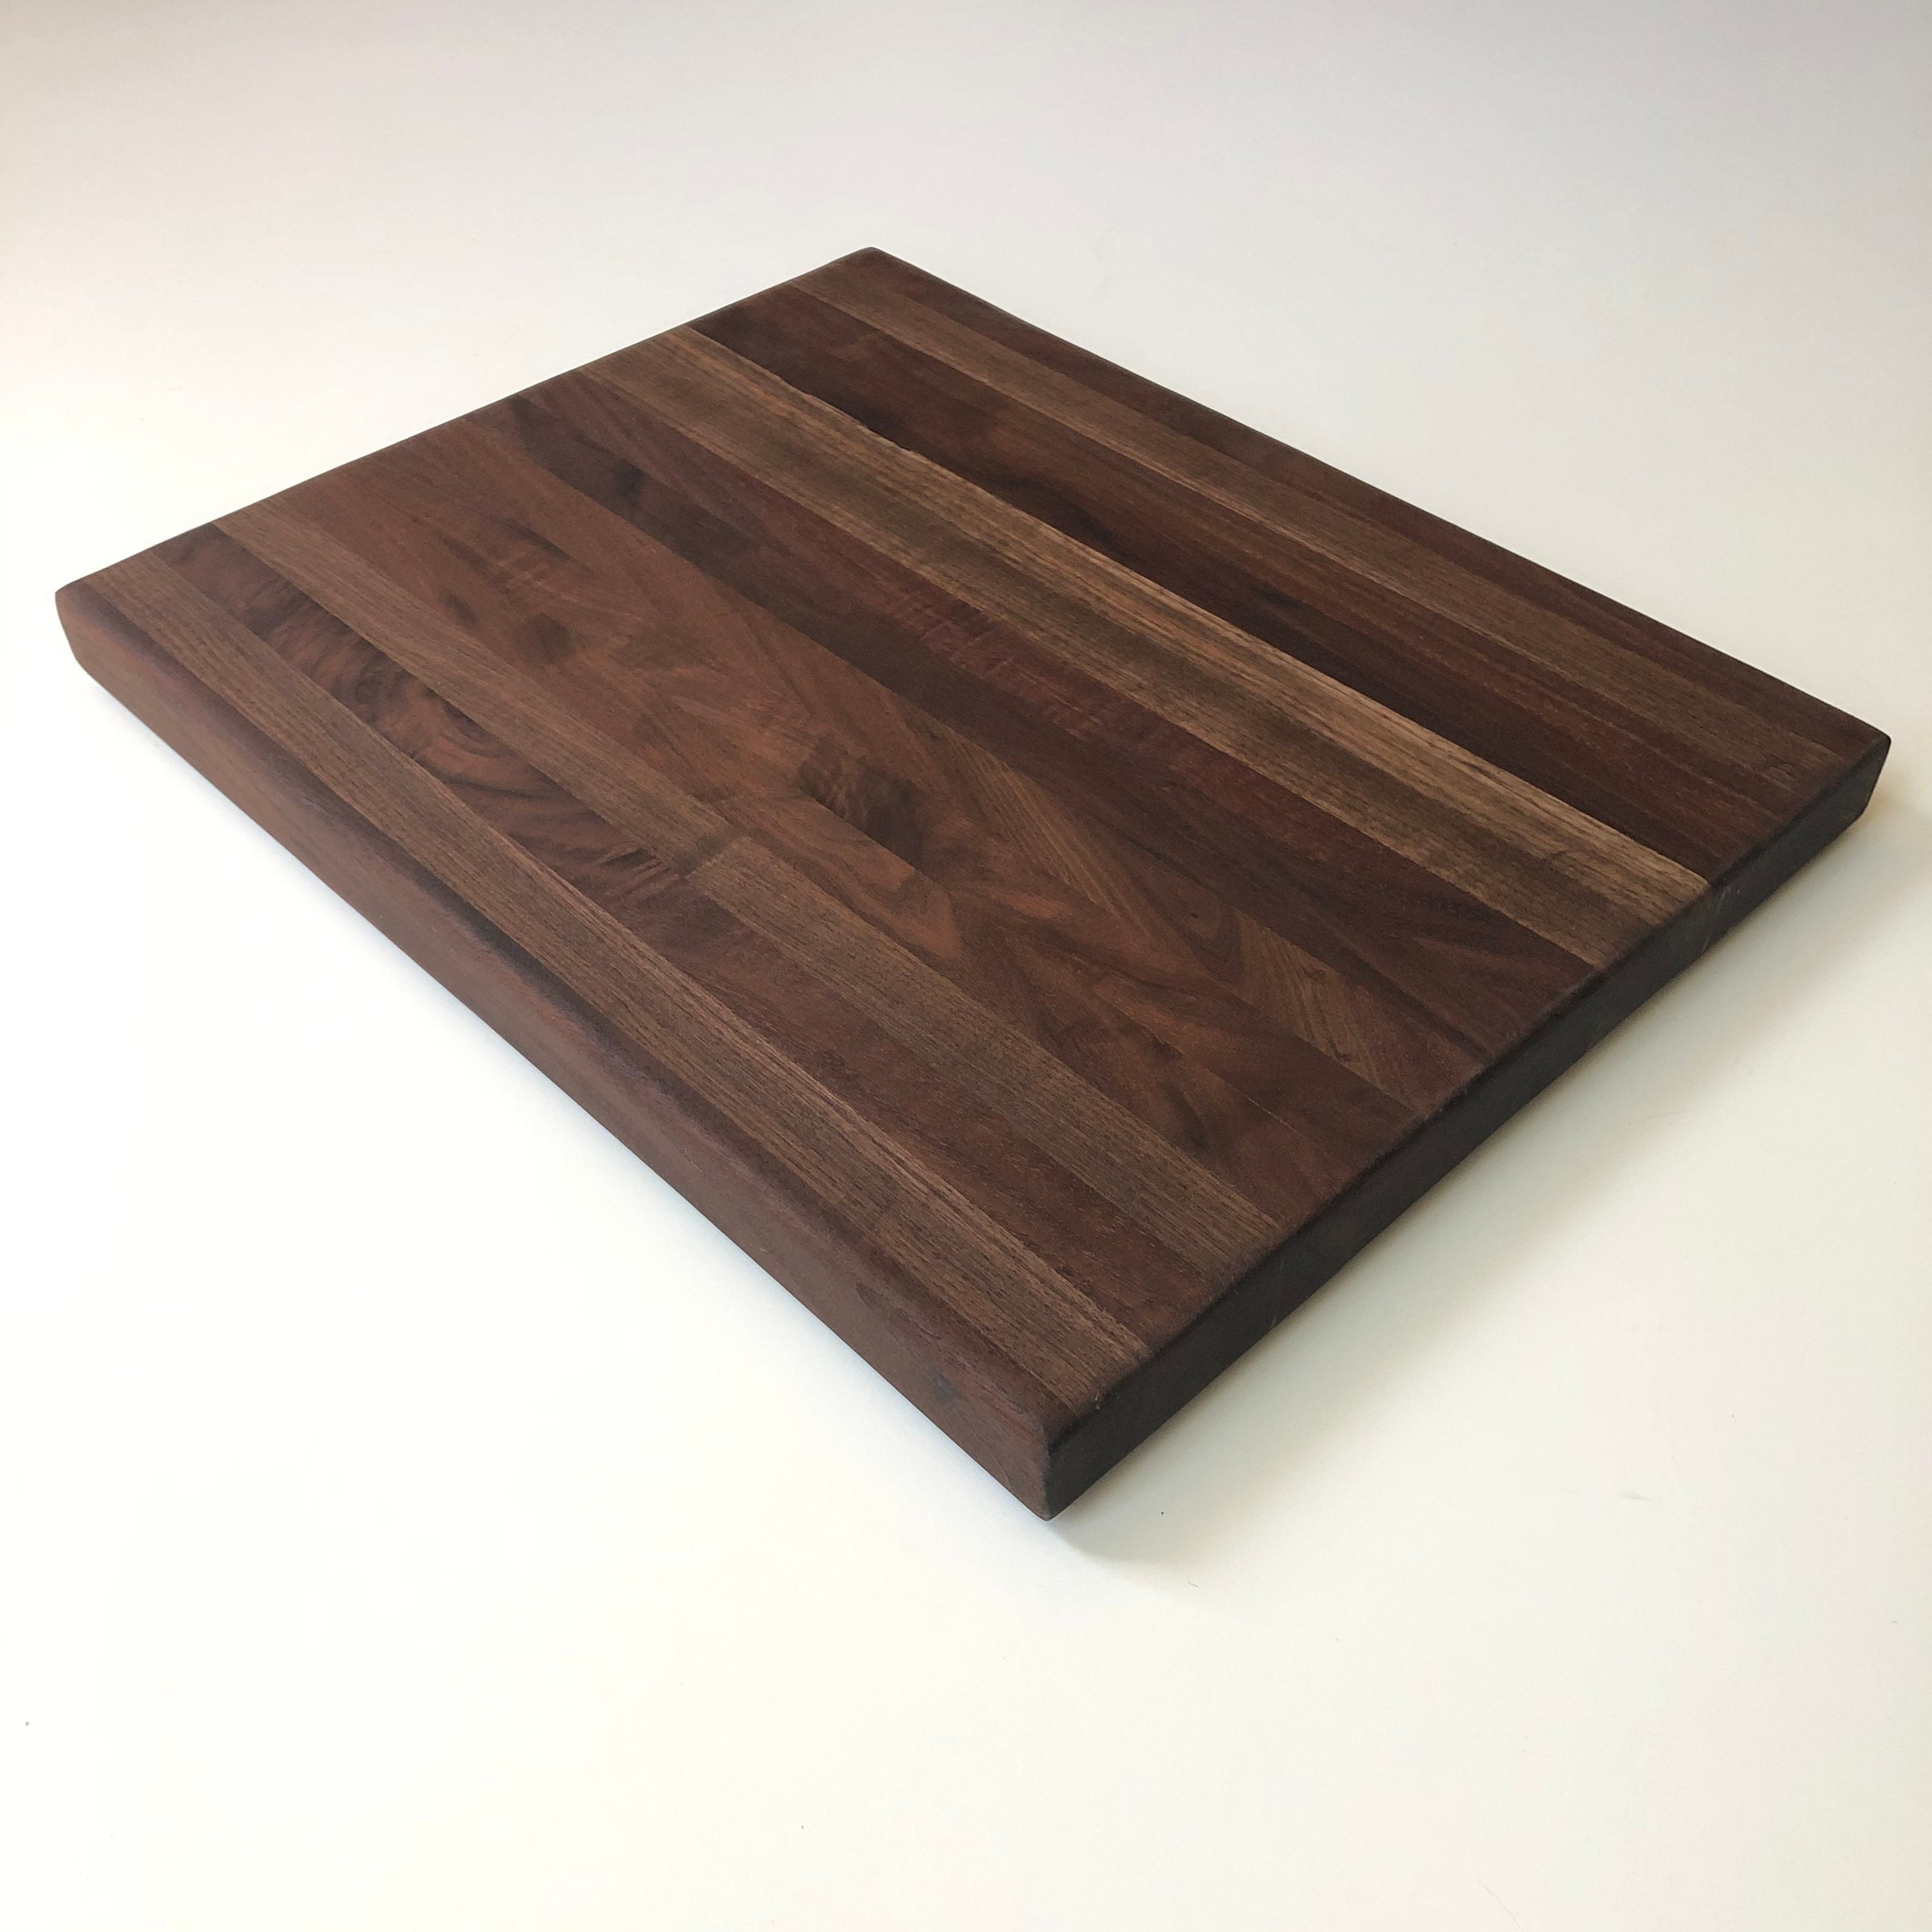 Felled Black Walnut Round Cutting Board – Little Ledge Woodworks